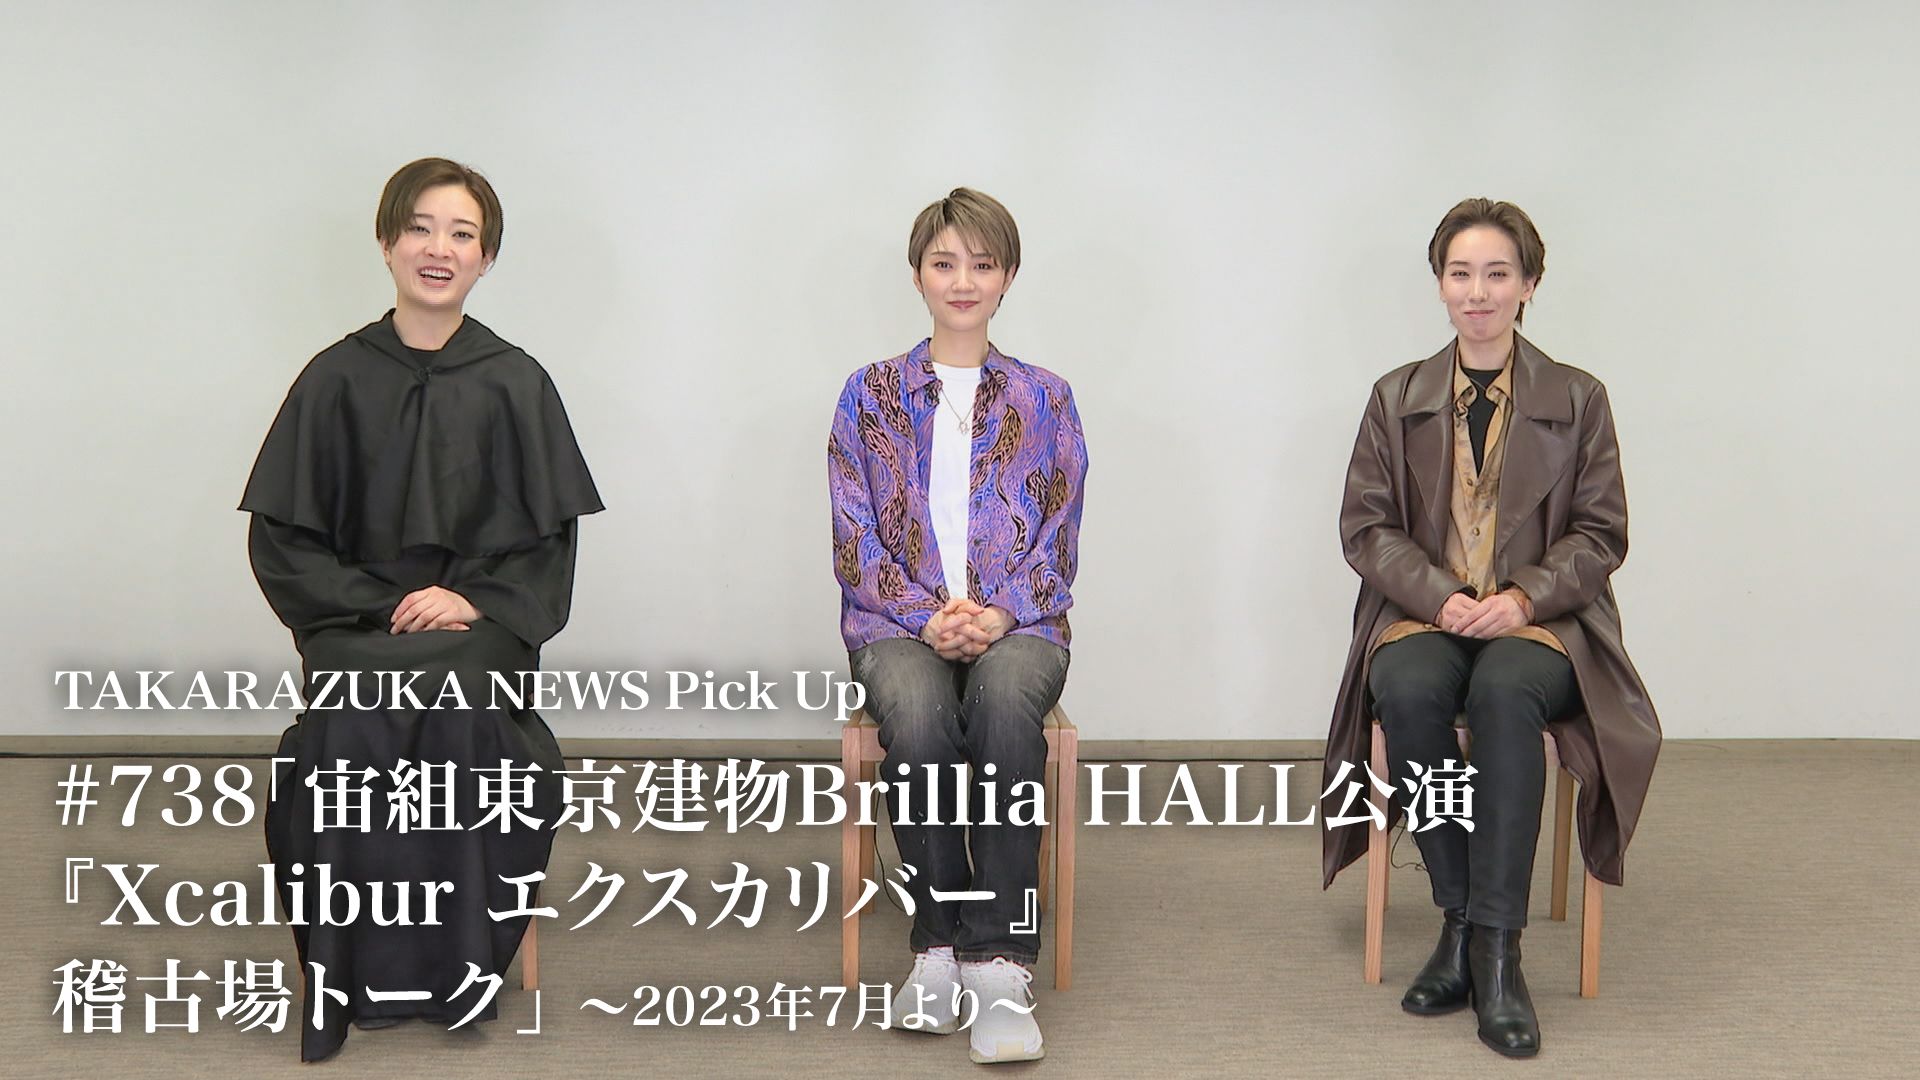 TAKARAZUKA NEWS Pick Up #738「宙組東京建物Brillia HALL公演『Xcalibur エクスカリバー』稽古場トーク」〜2023年7月より〜